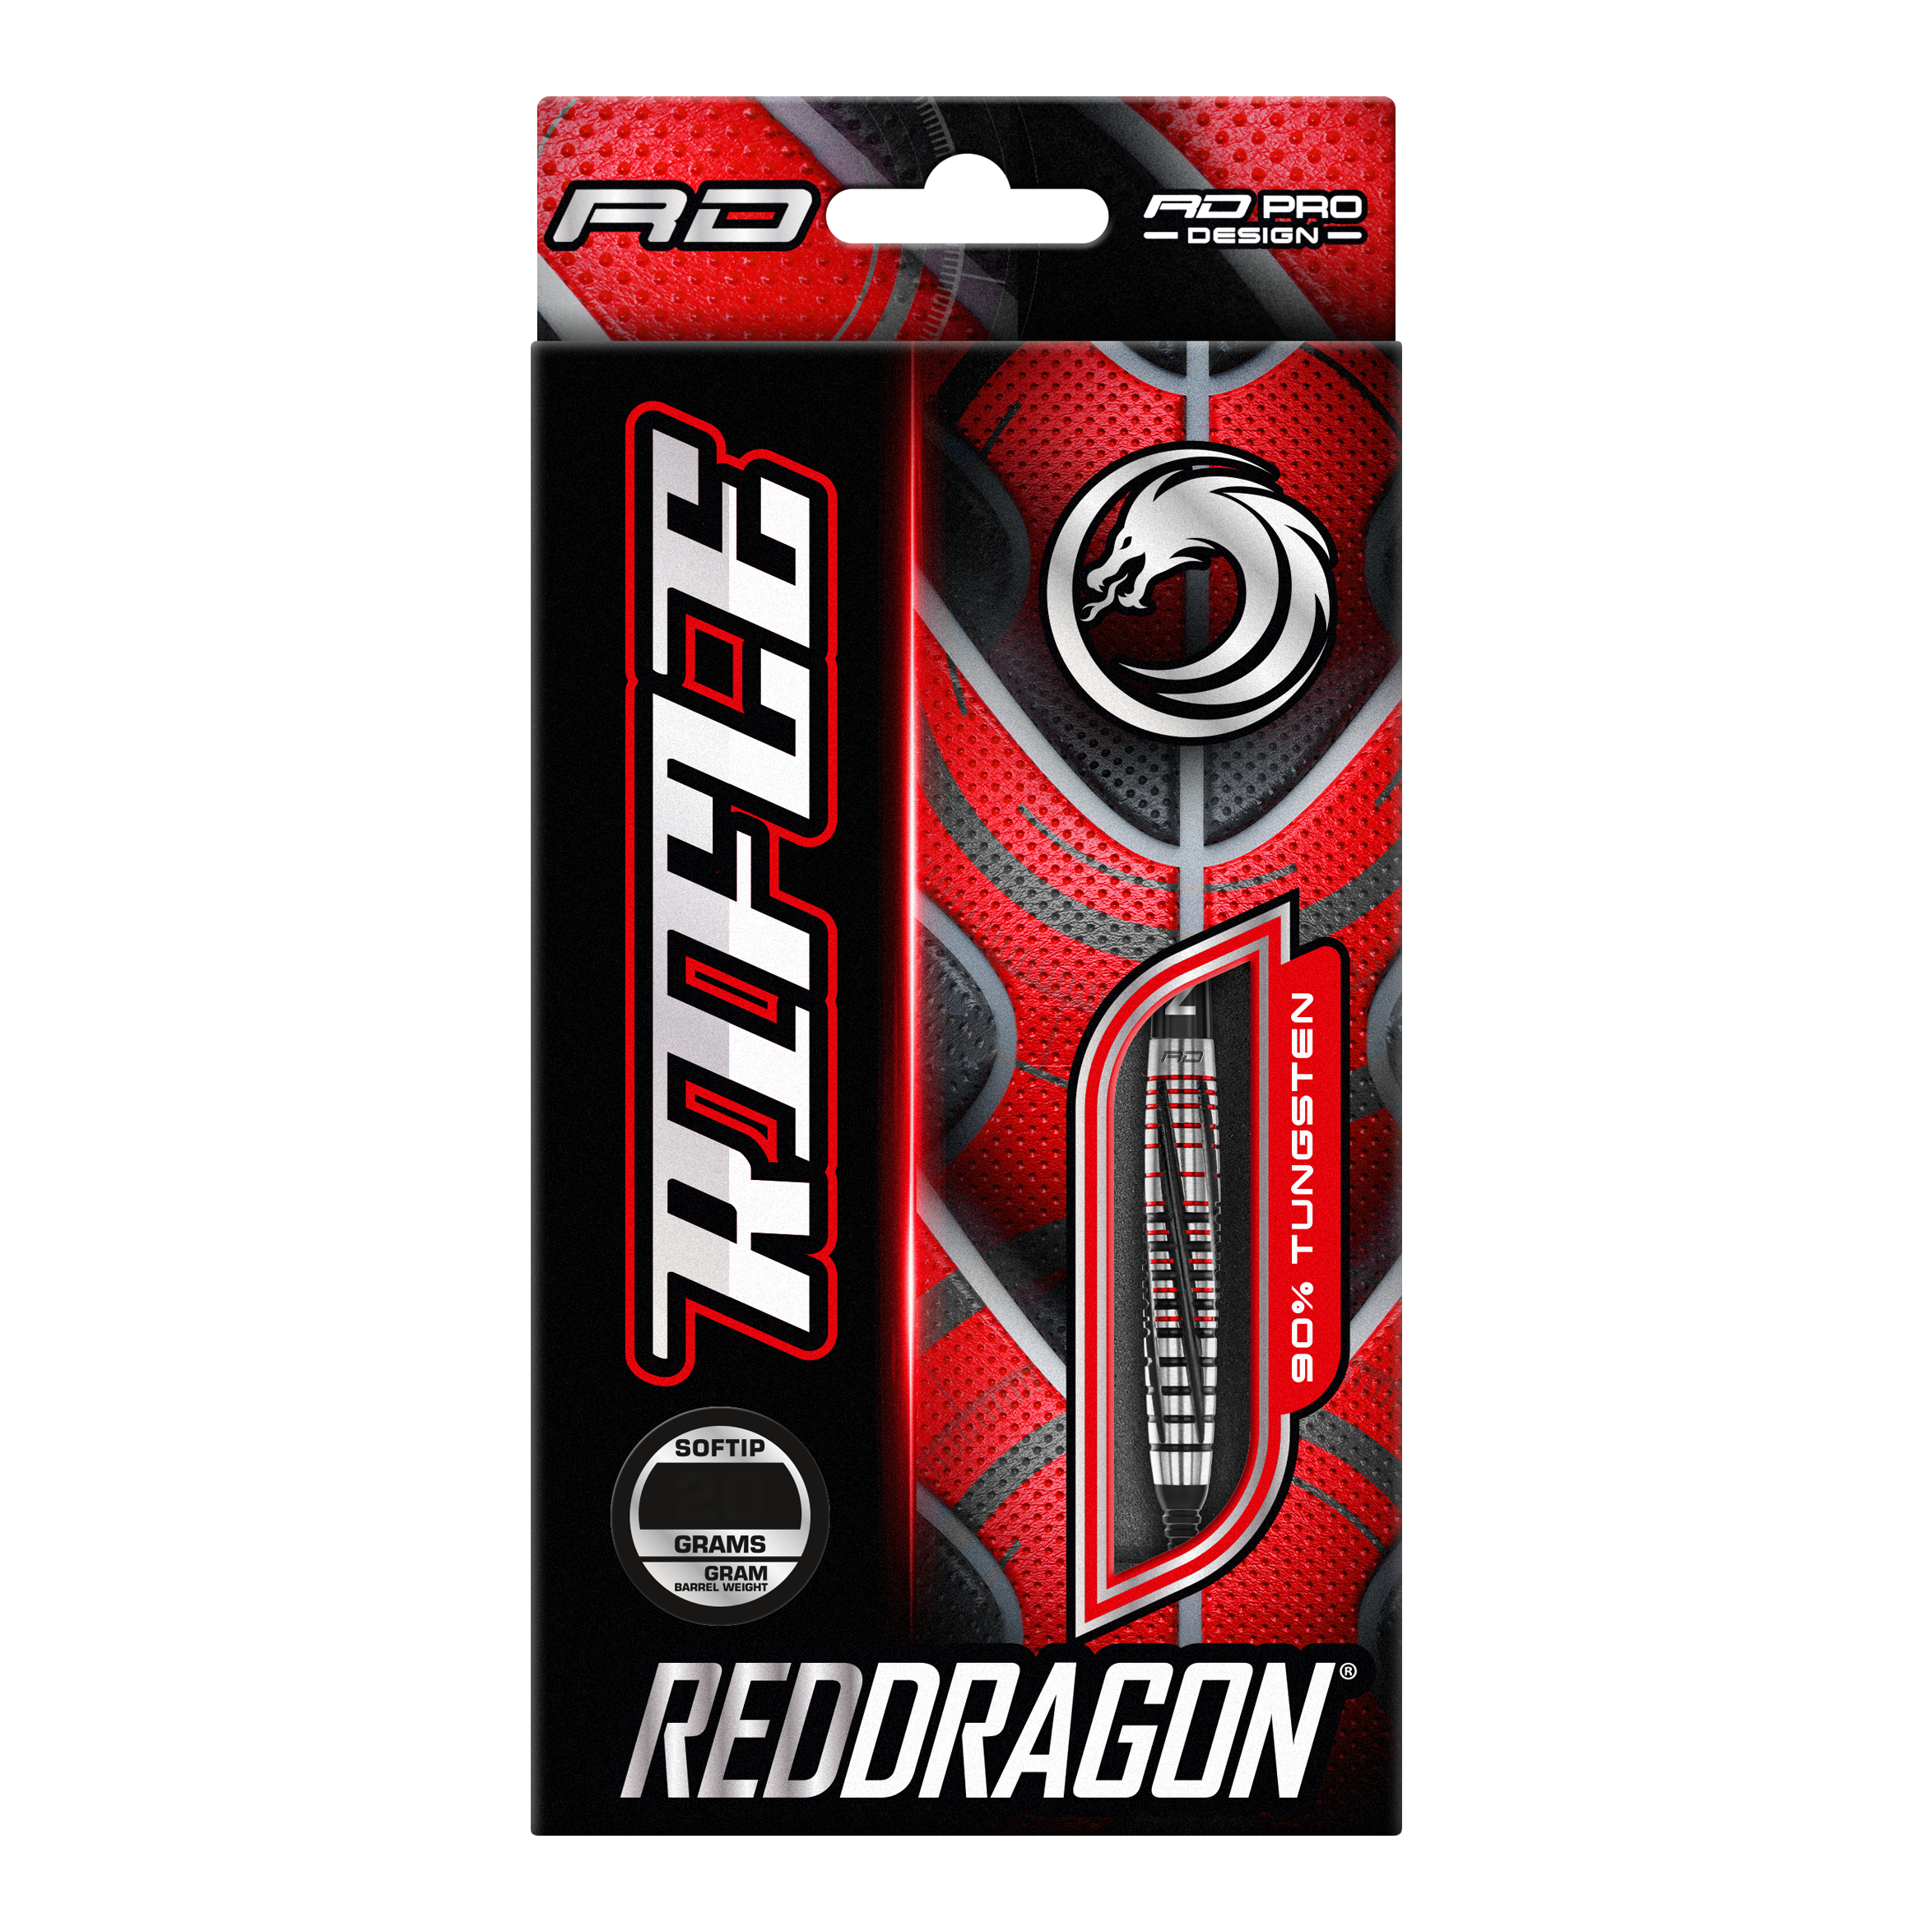 Red Dragon Rifle Softdarts - 20g